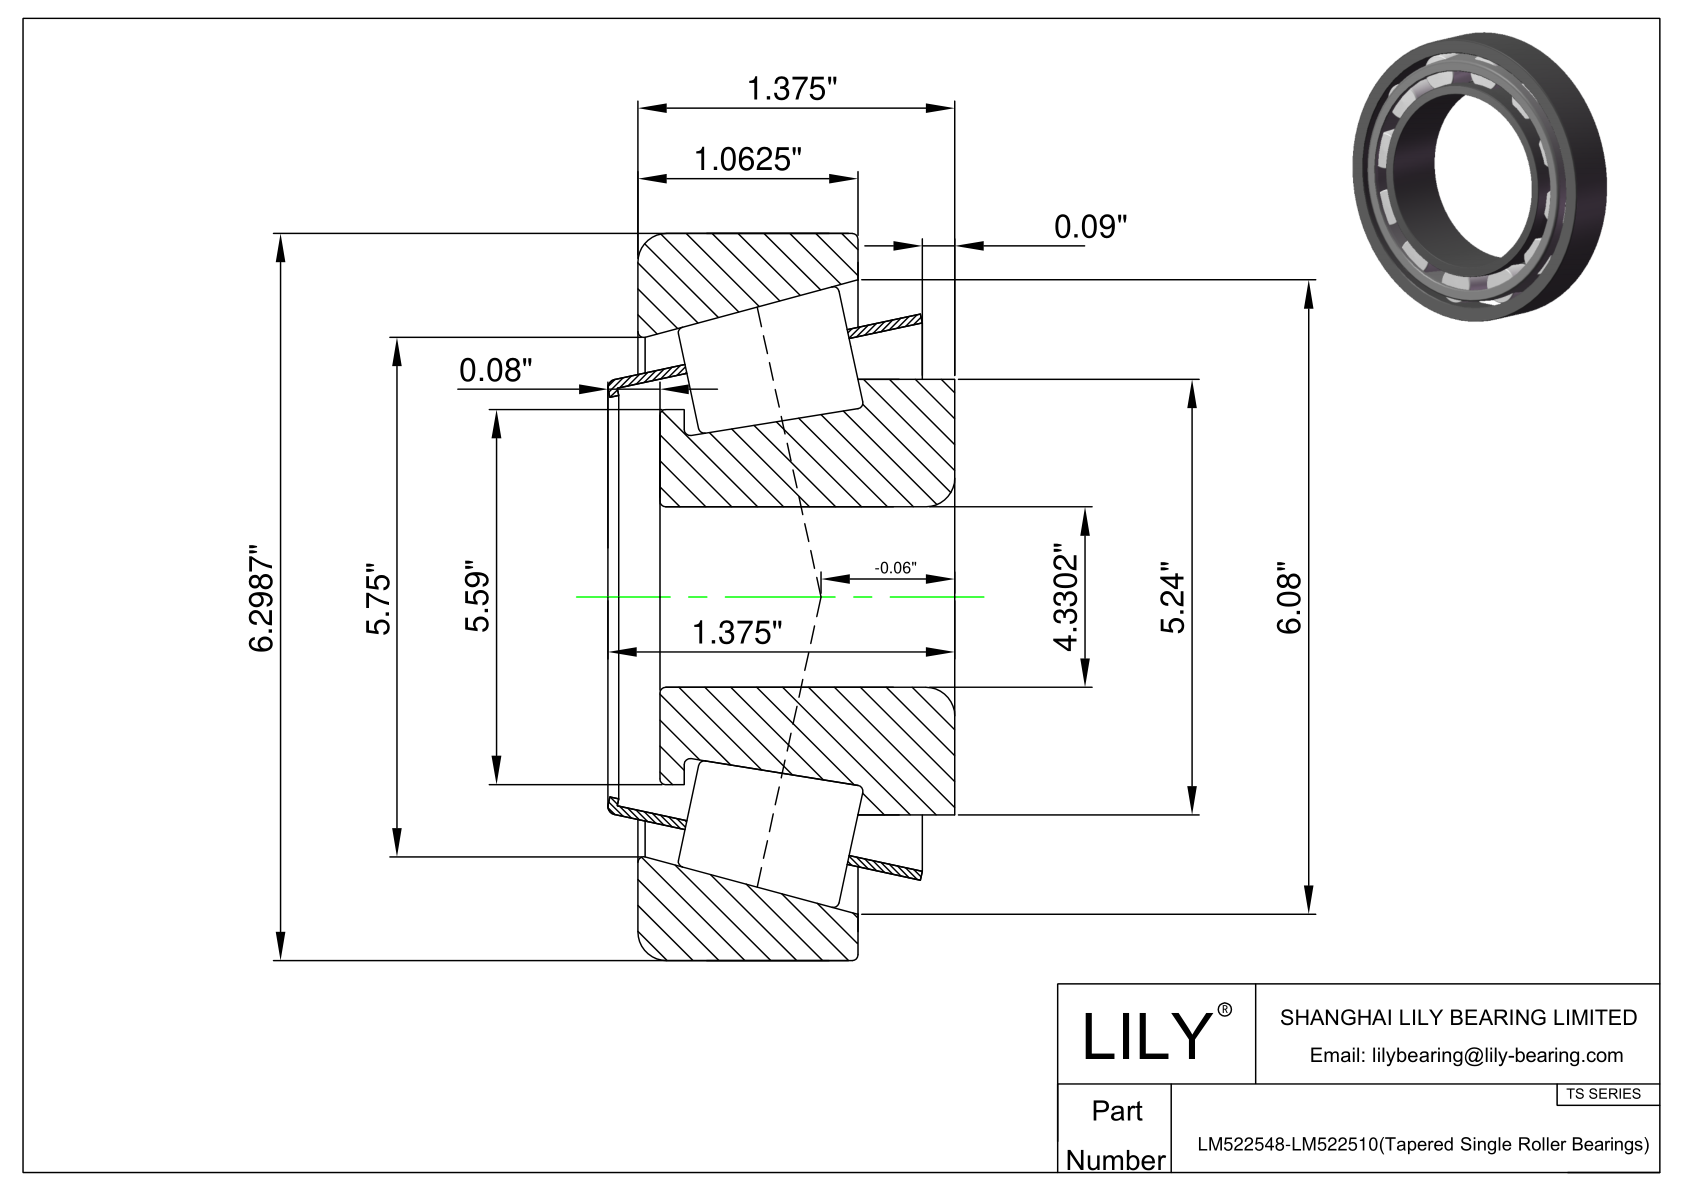 LM522548-LM522510 TS系列(圆锥单滚子轴承)(英制) CAD图形